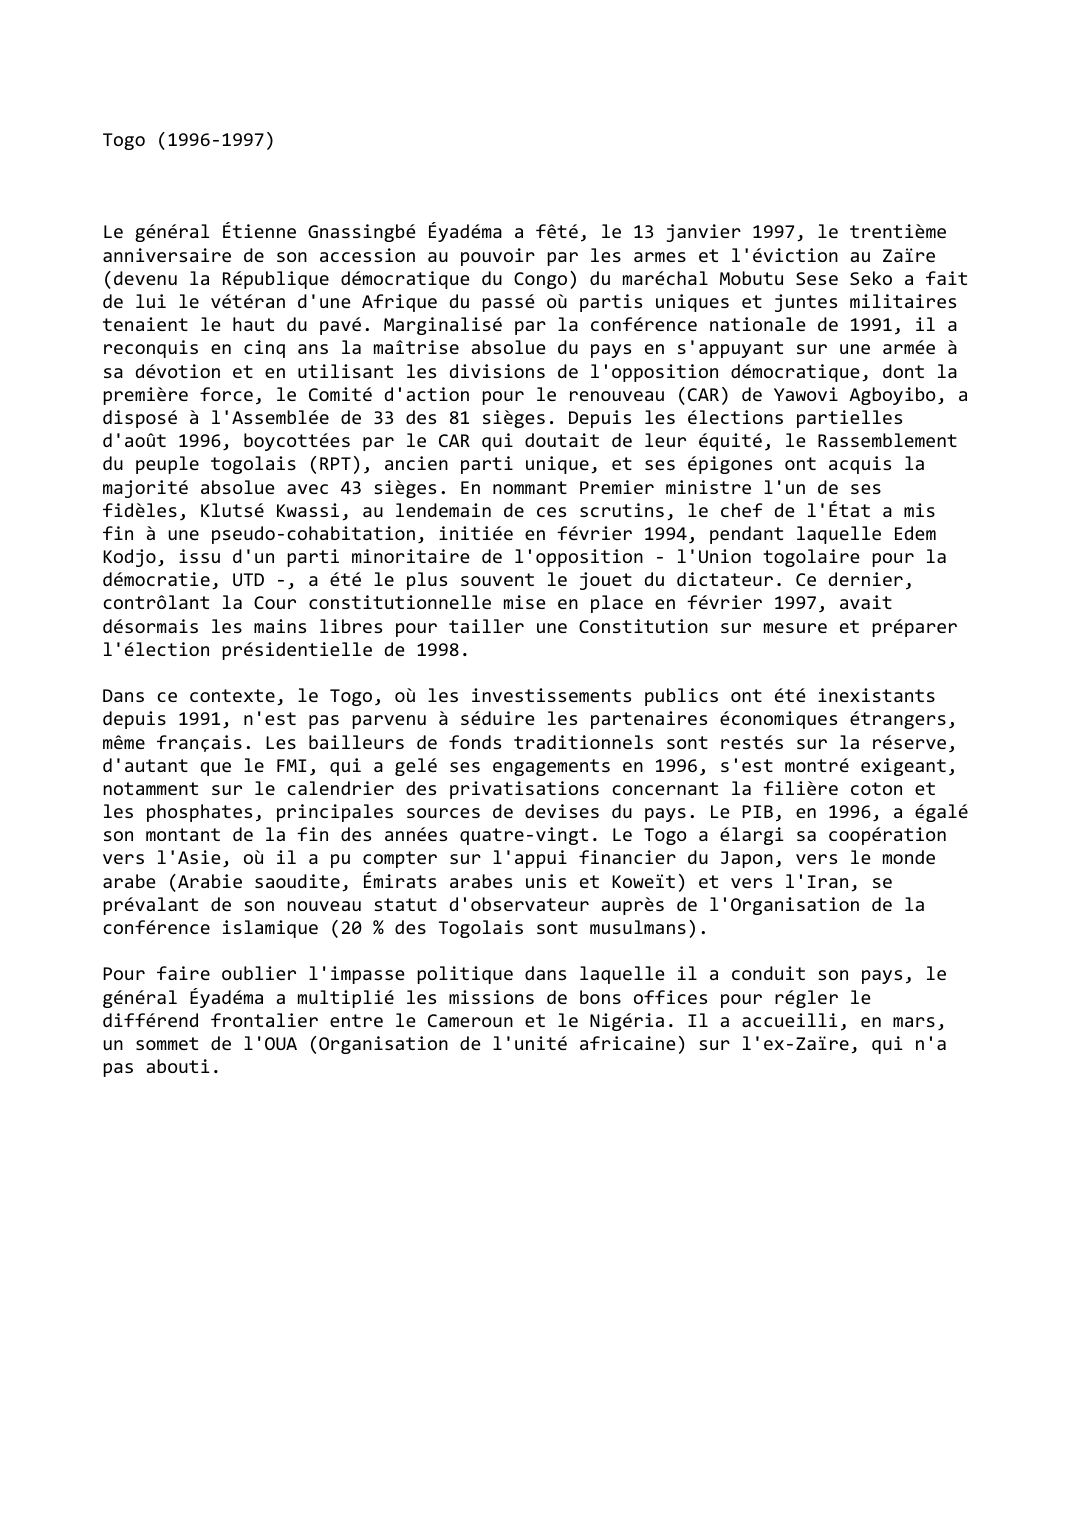 Prévisualisation du document Togo (1996-1997)